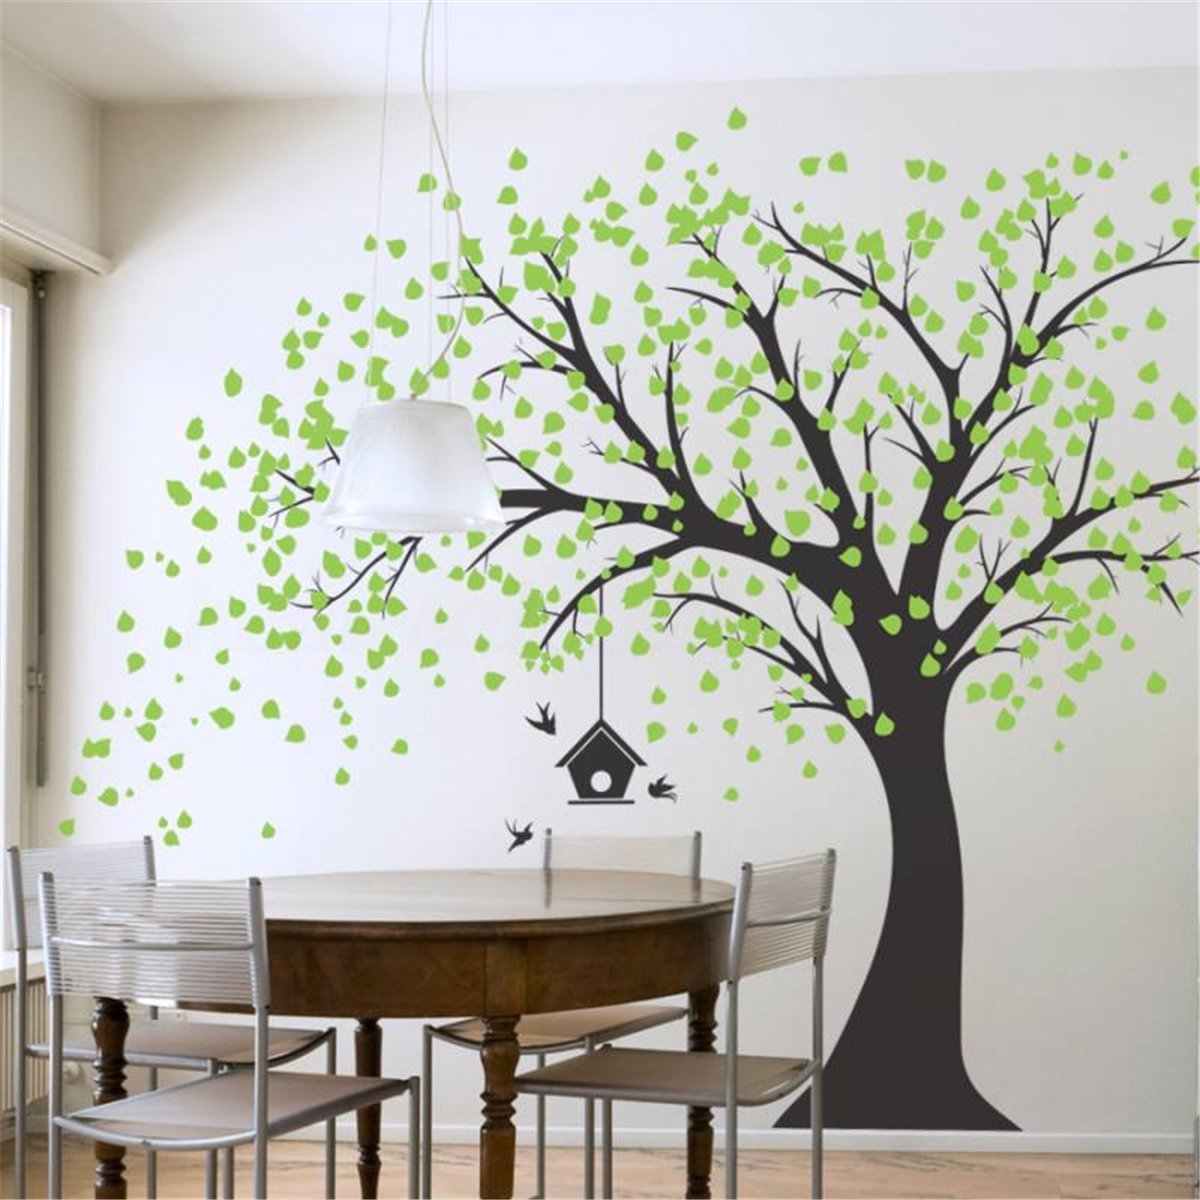 Нарисованное дерево на стене в интерьере (45 фото)